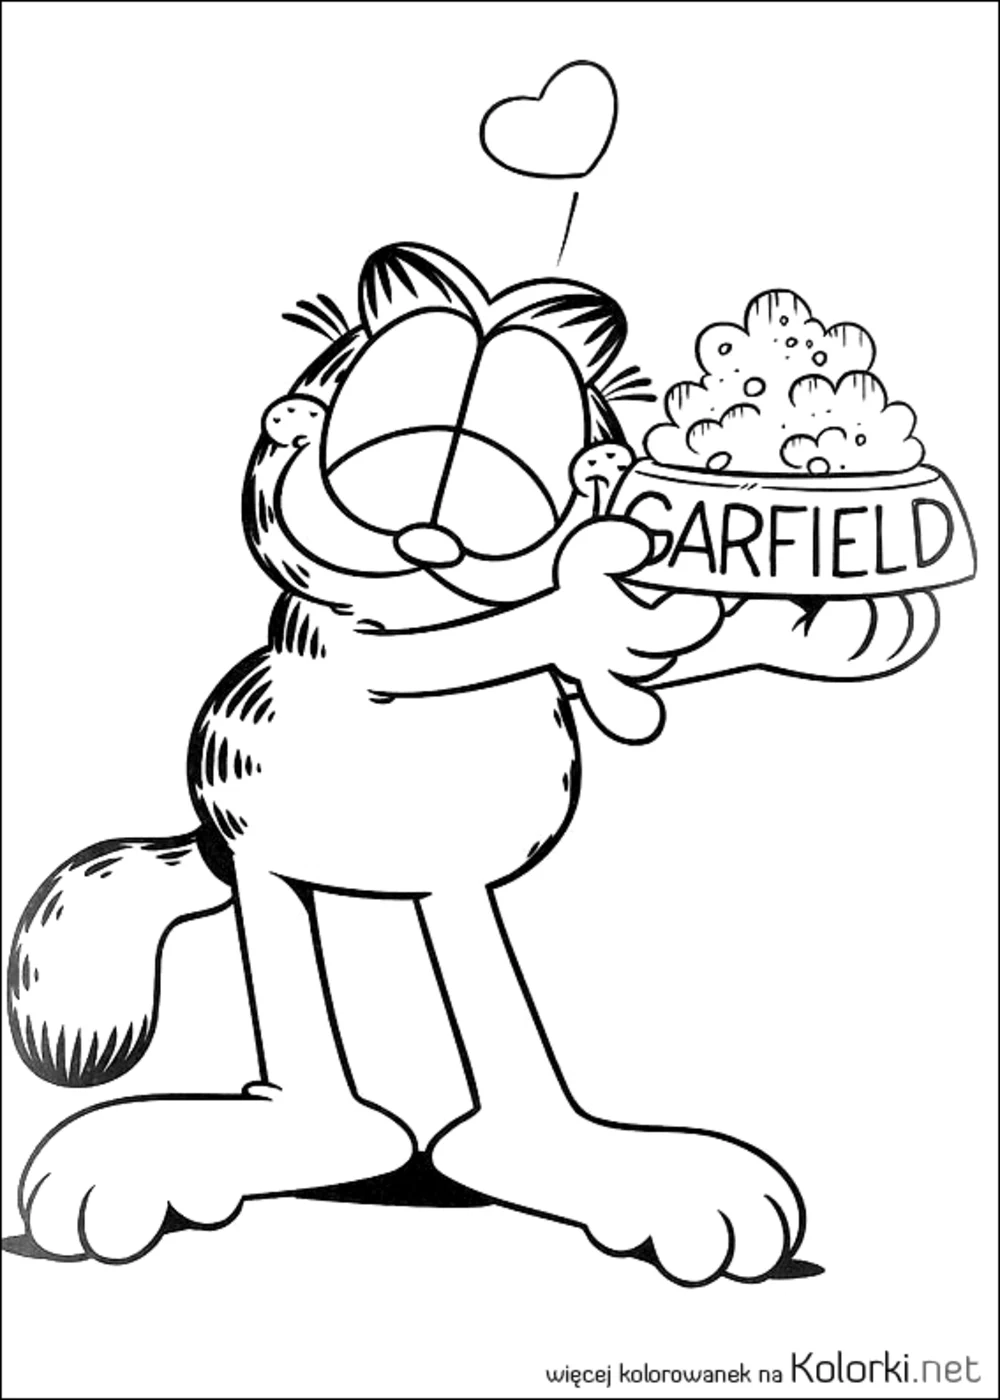 Garfield, jedzenie, kot, serce